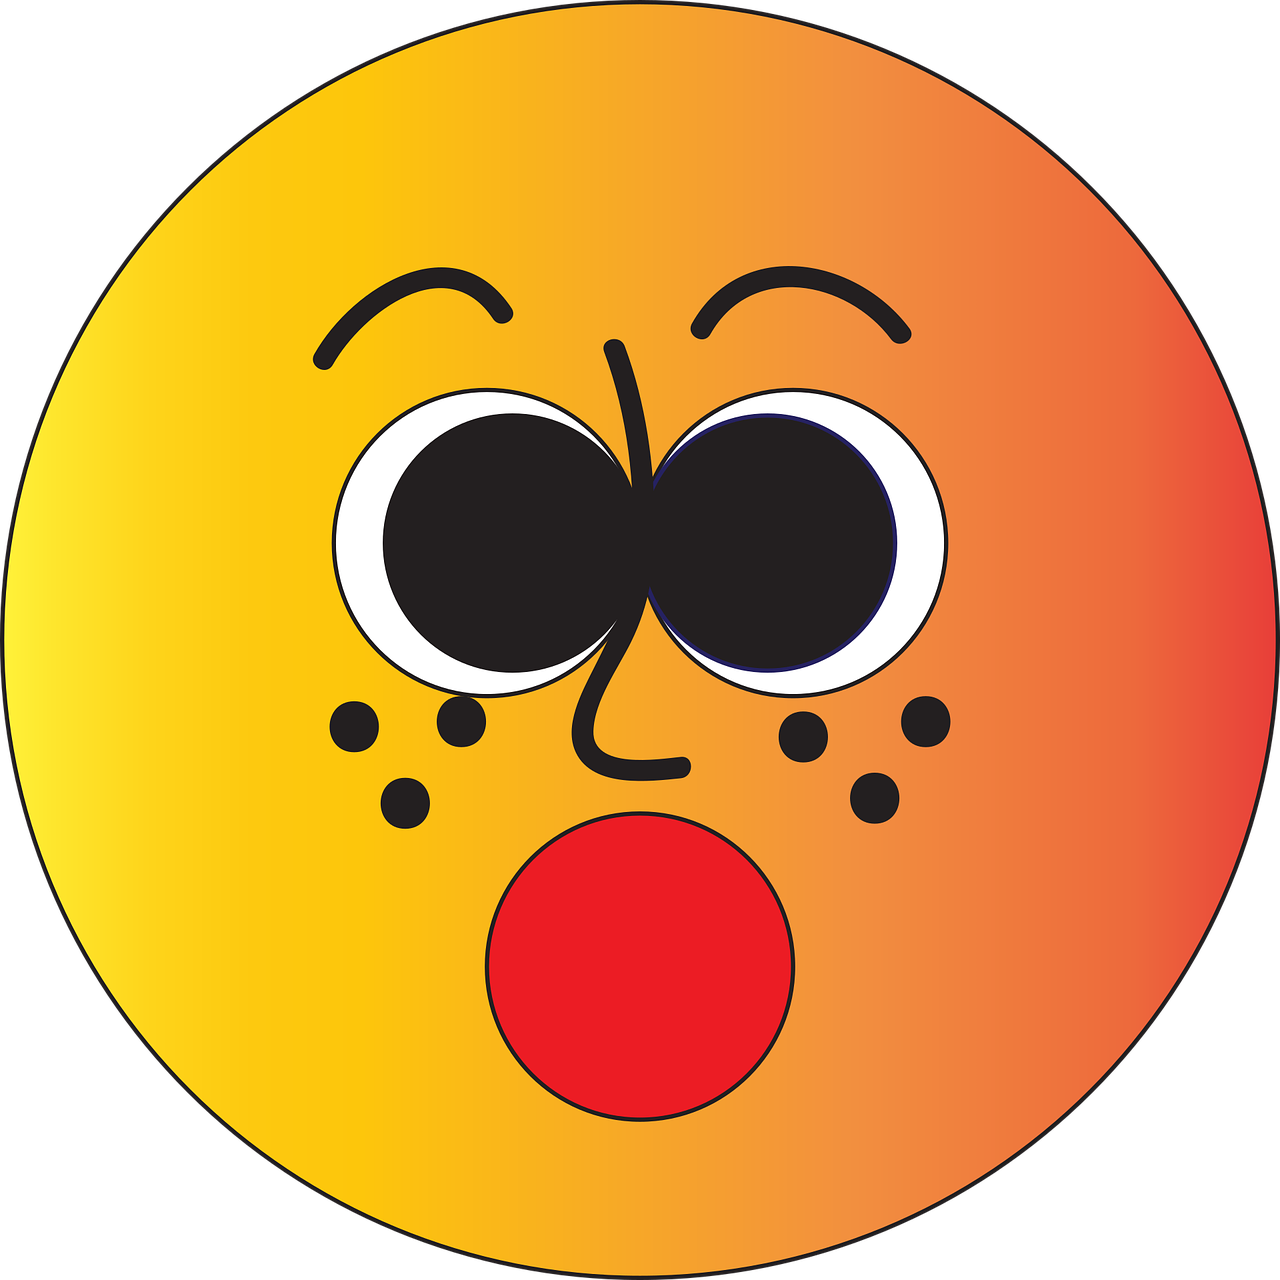 Shocked Face Emoji Graphic PNG image